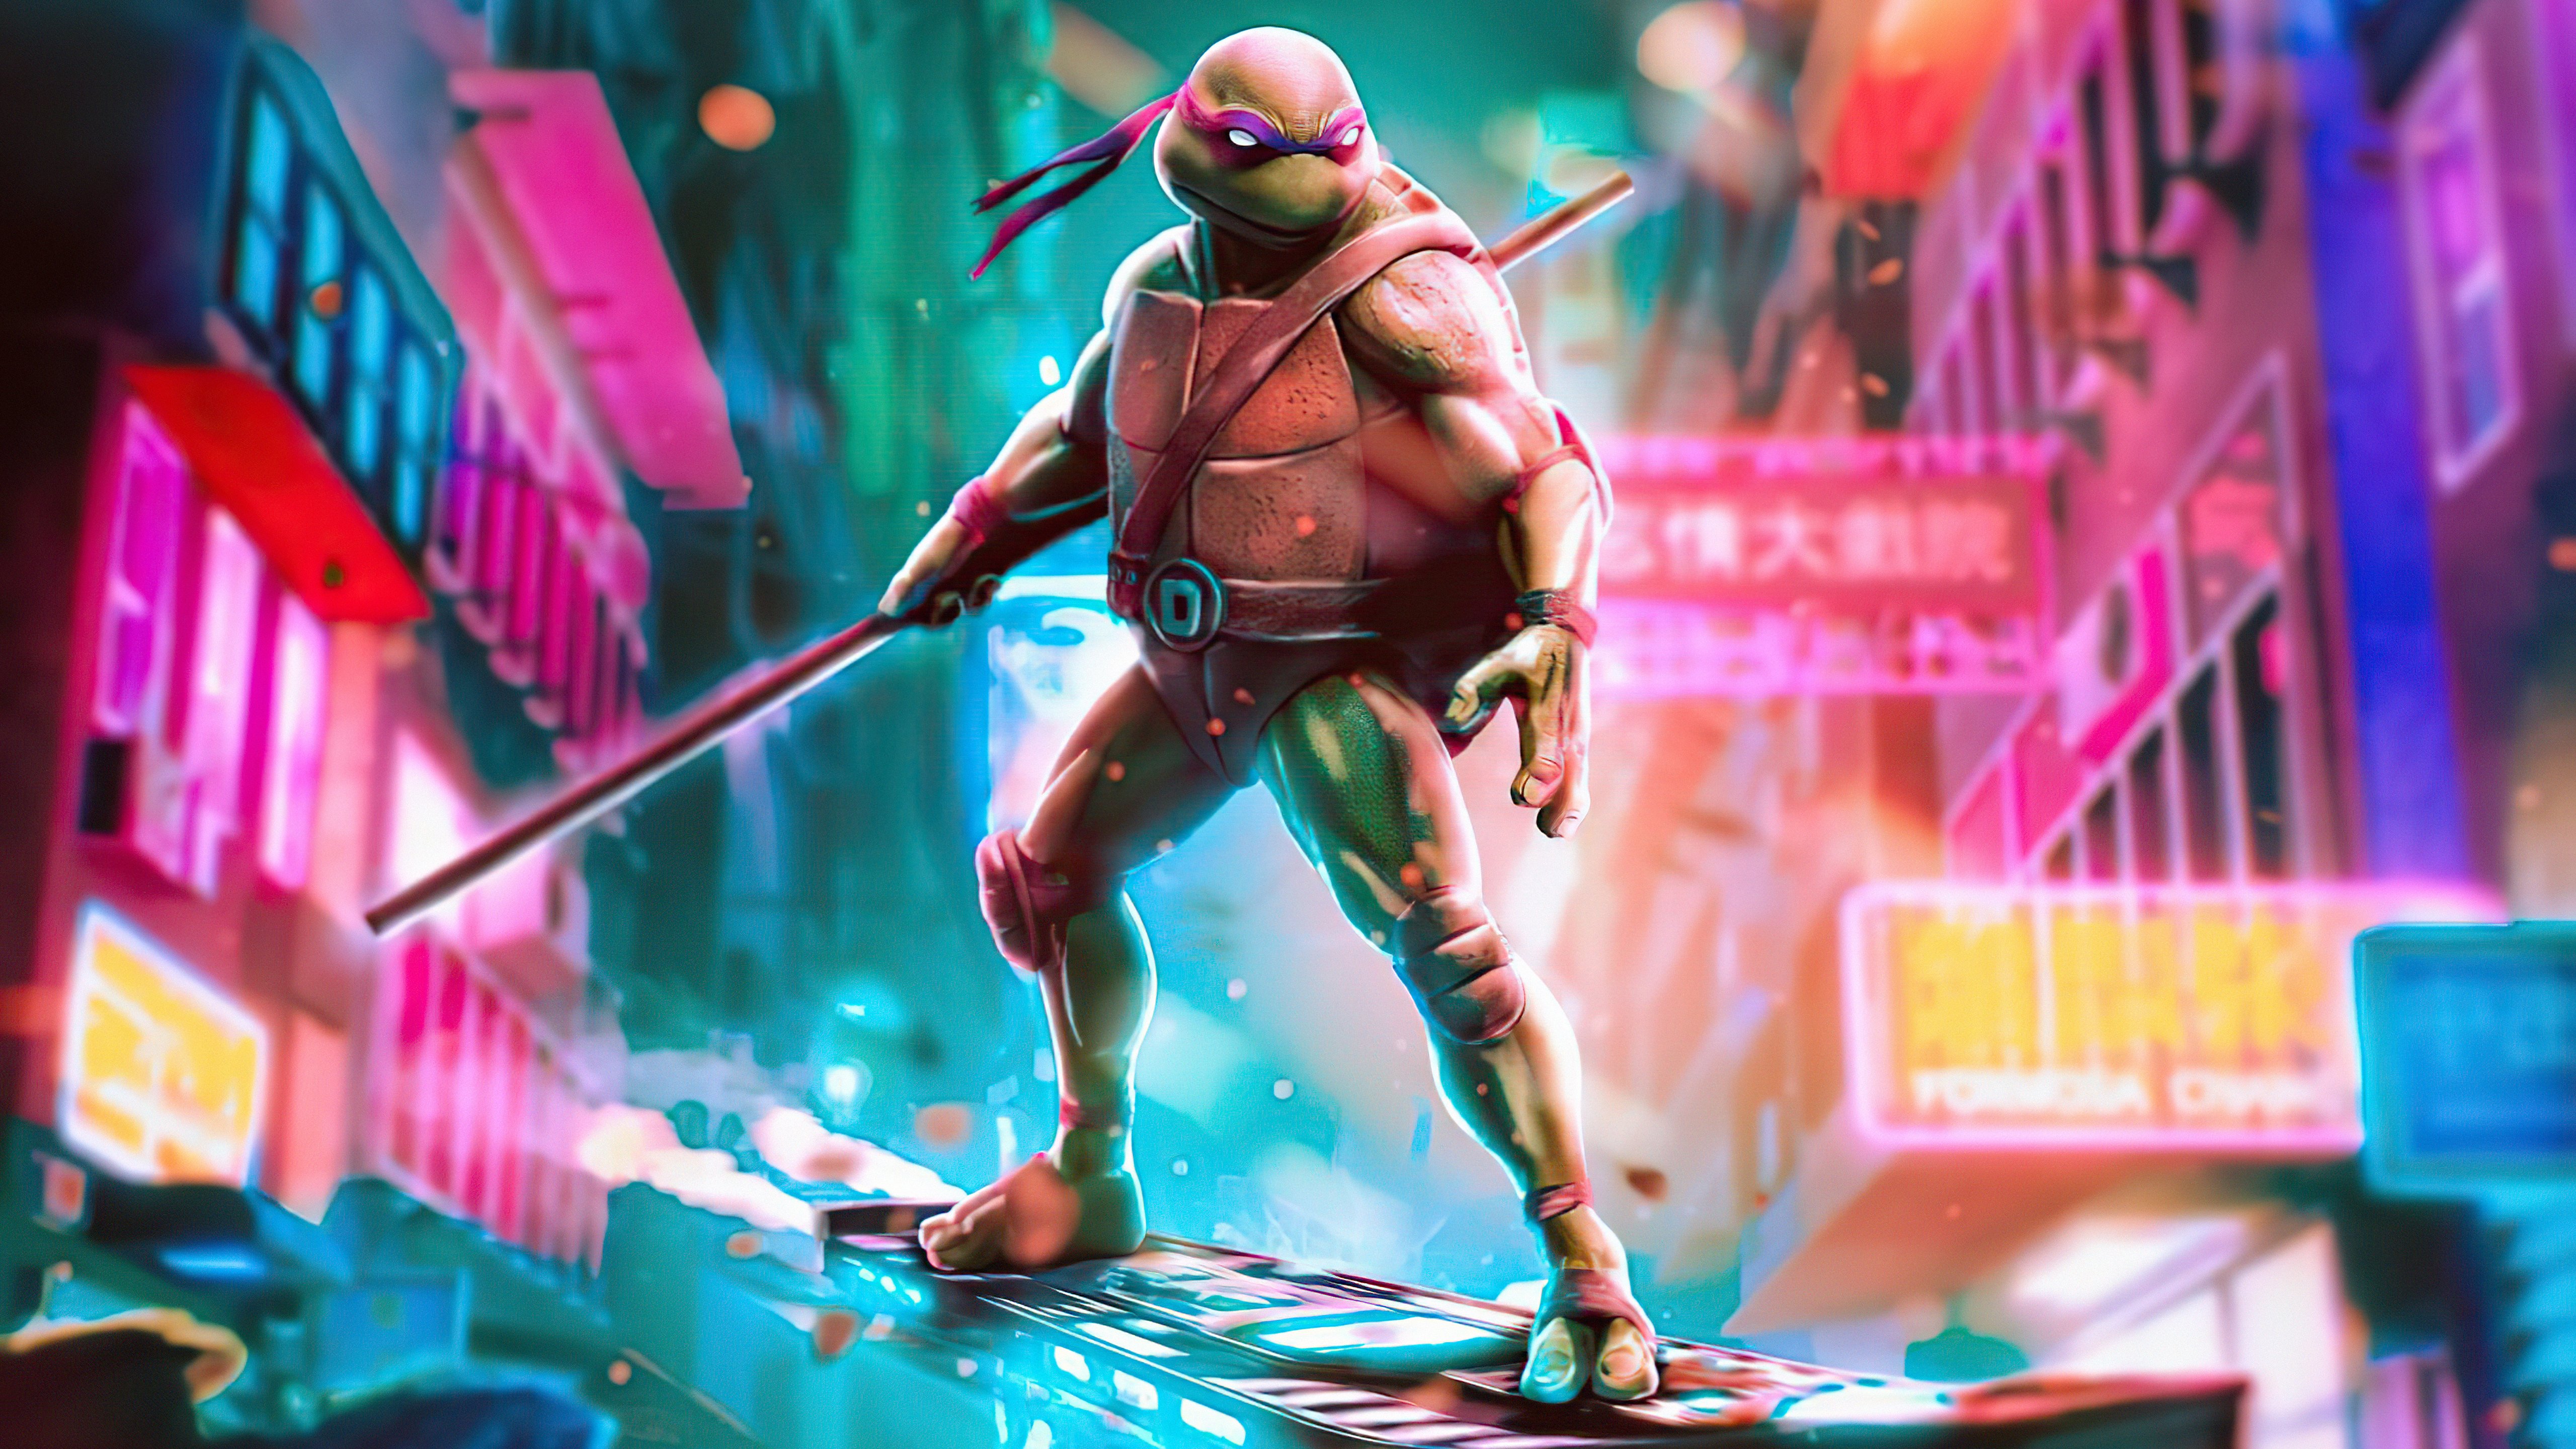 The Cyberpunk Ninja Turtle 5k, HD Artist, 4k Wallpaper, Image, Background, Photo and Picture